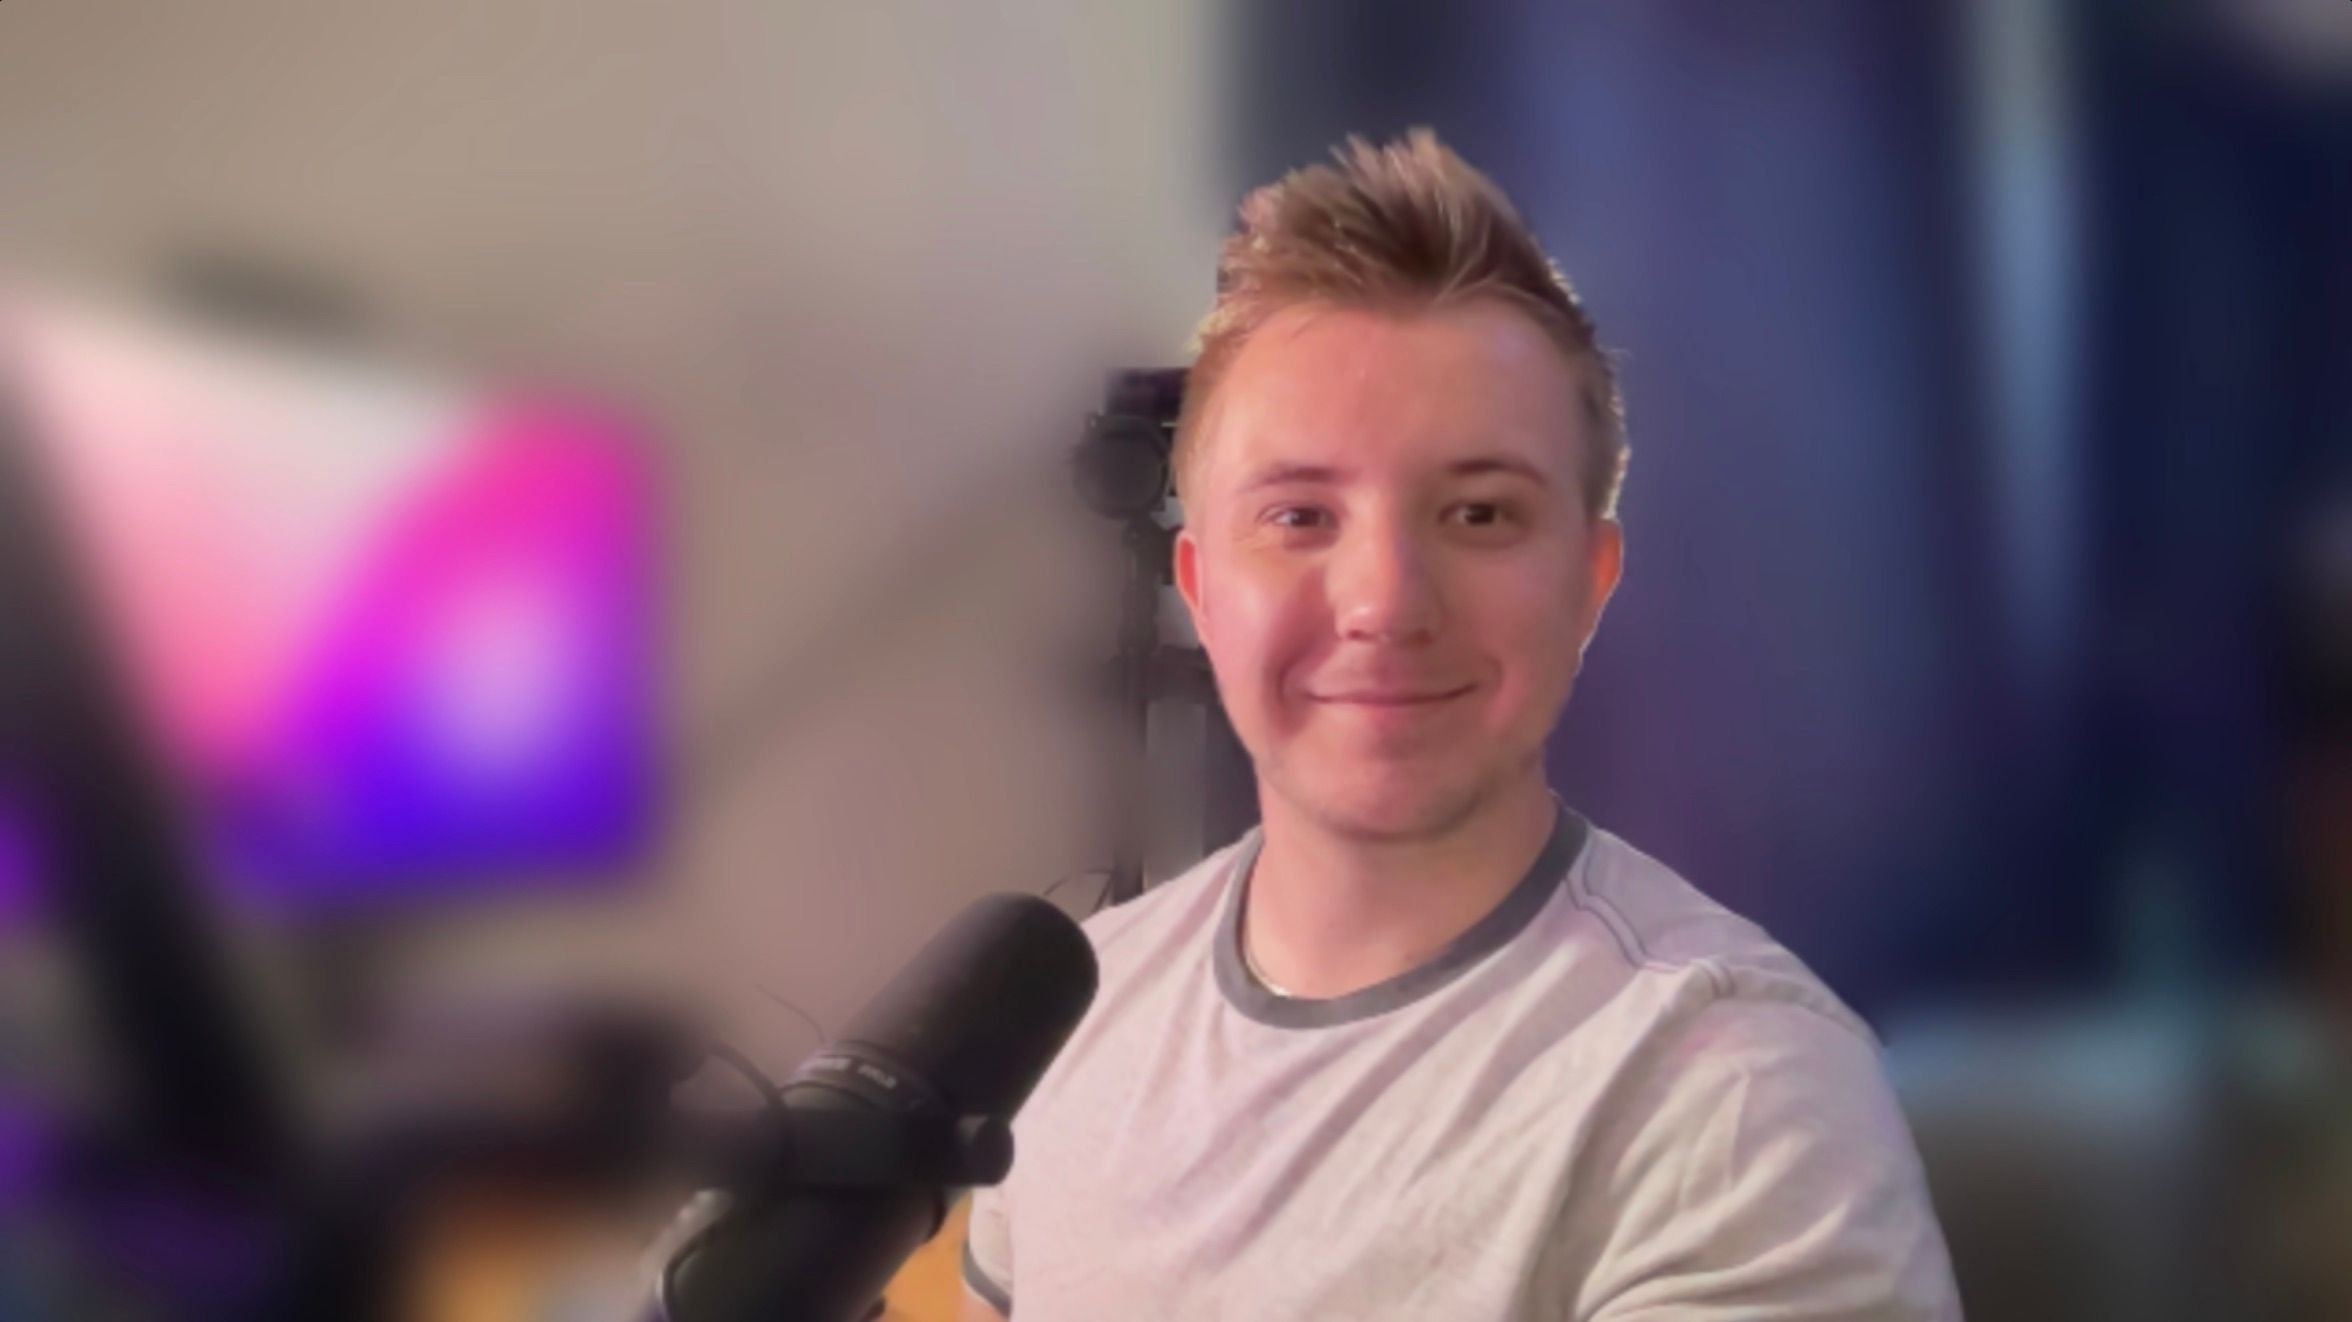 Mac Webcam using Discord's background blur